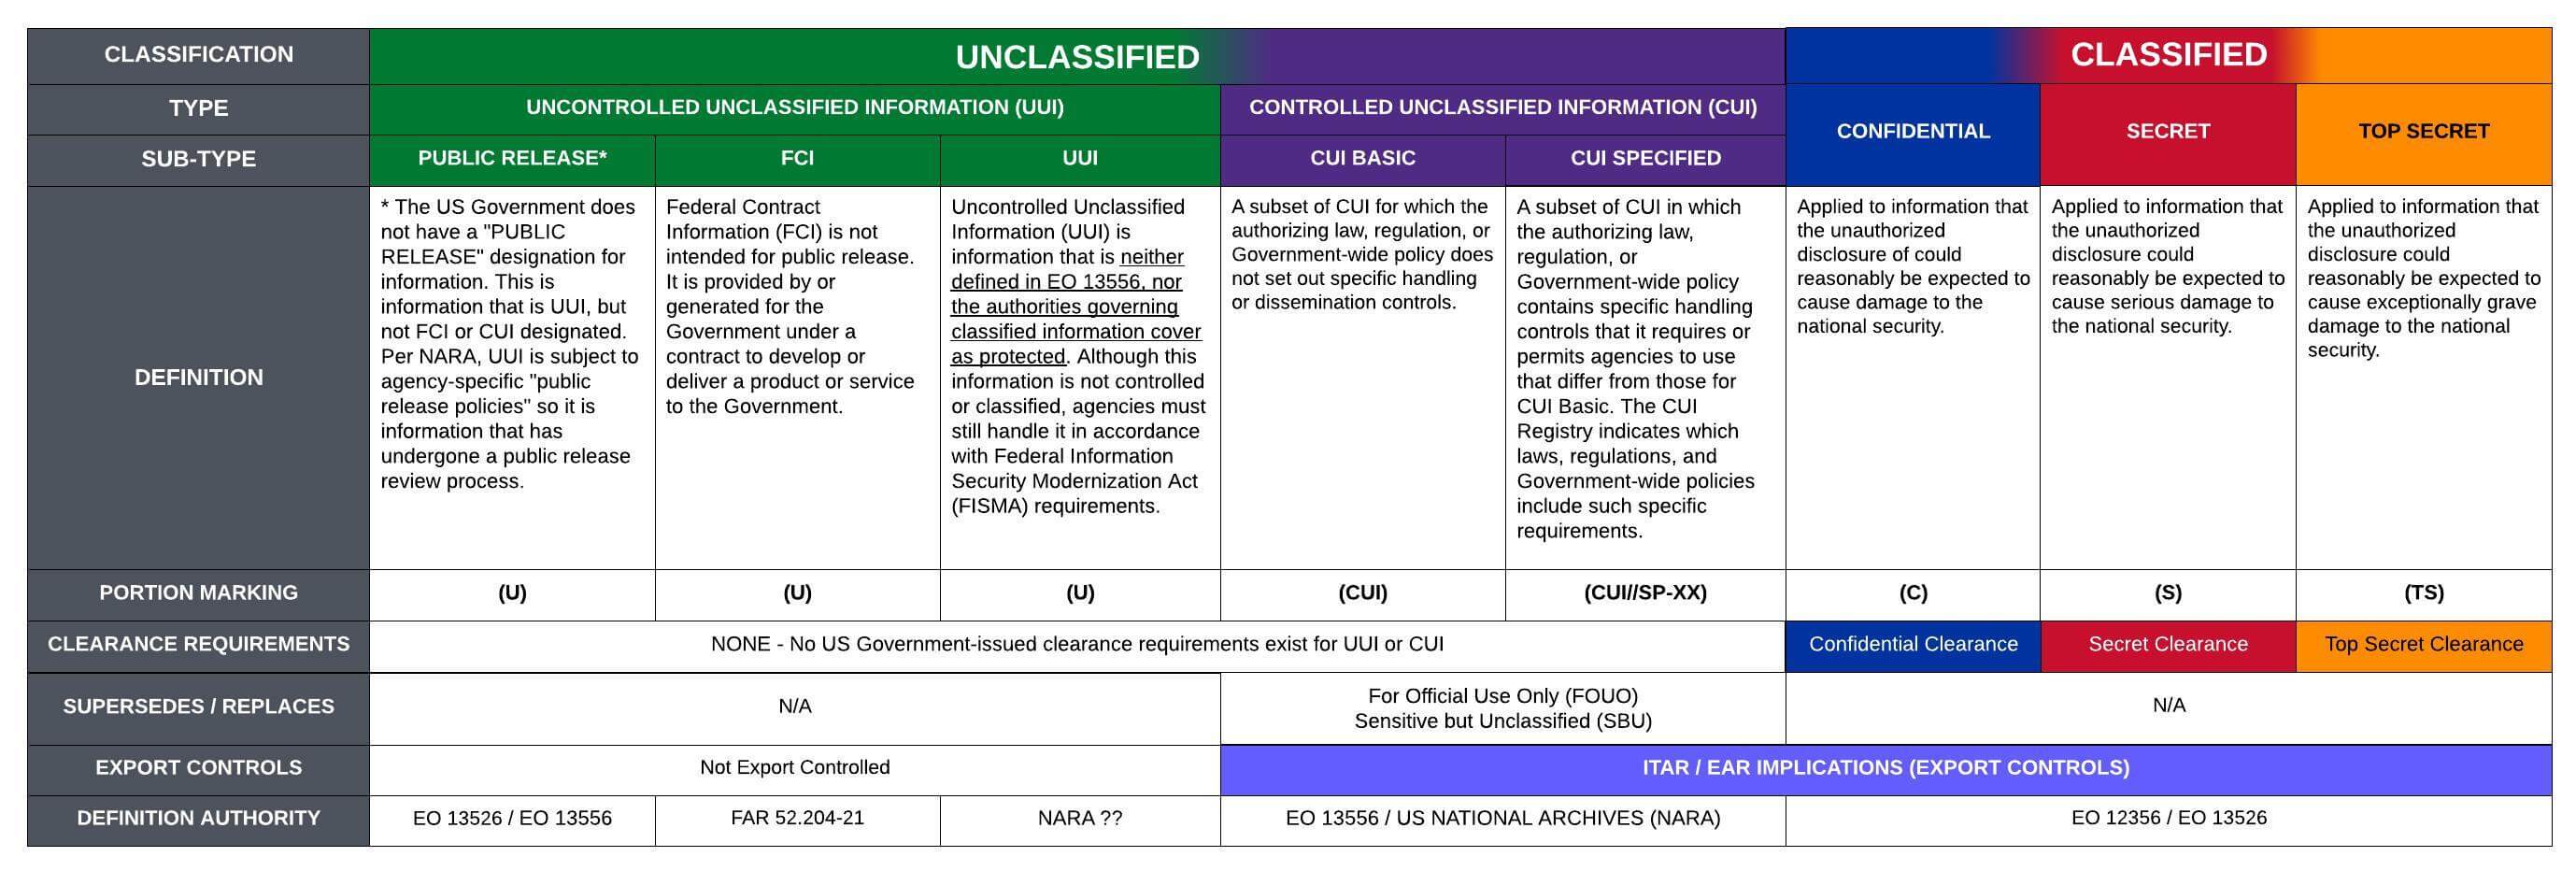 unclassified vs classified - UUI vs CUI vs confidential vs secret vs top secret